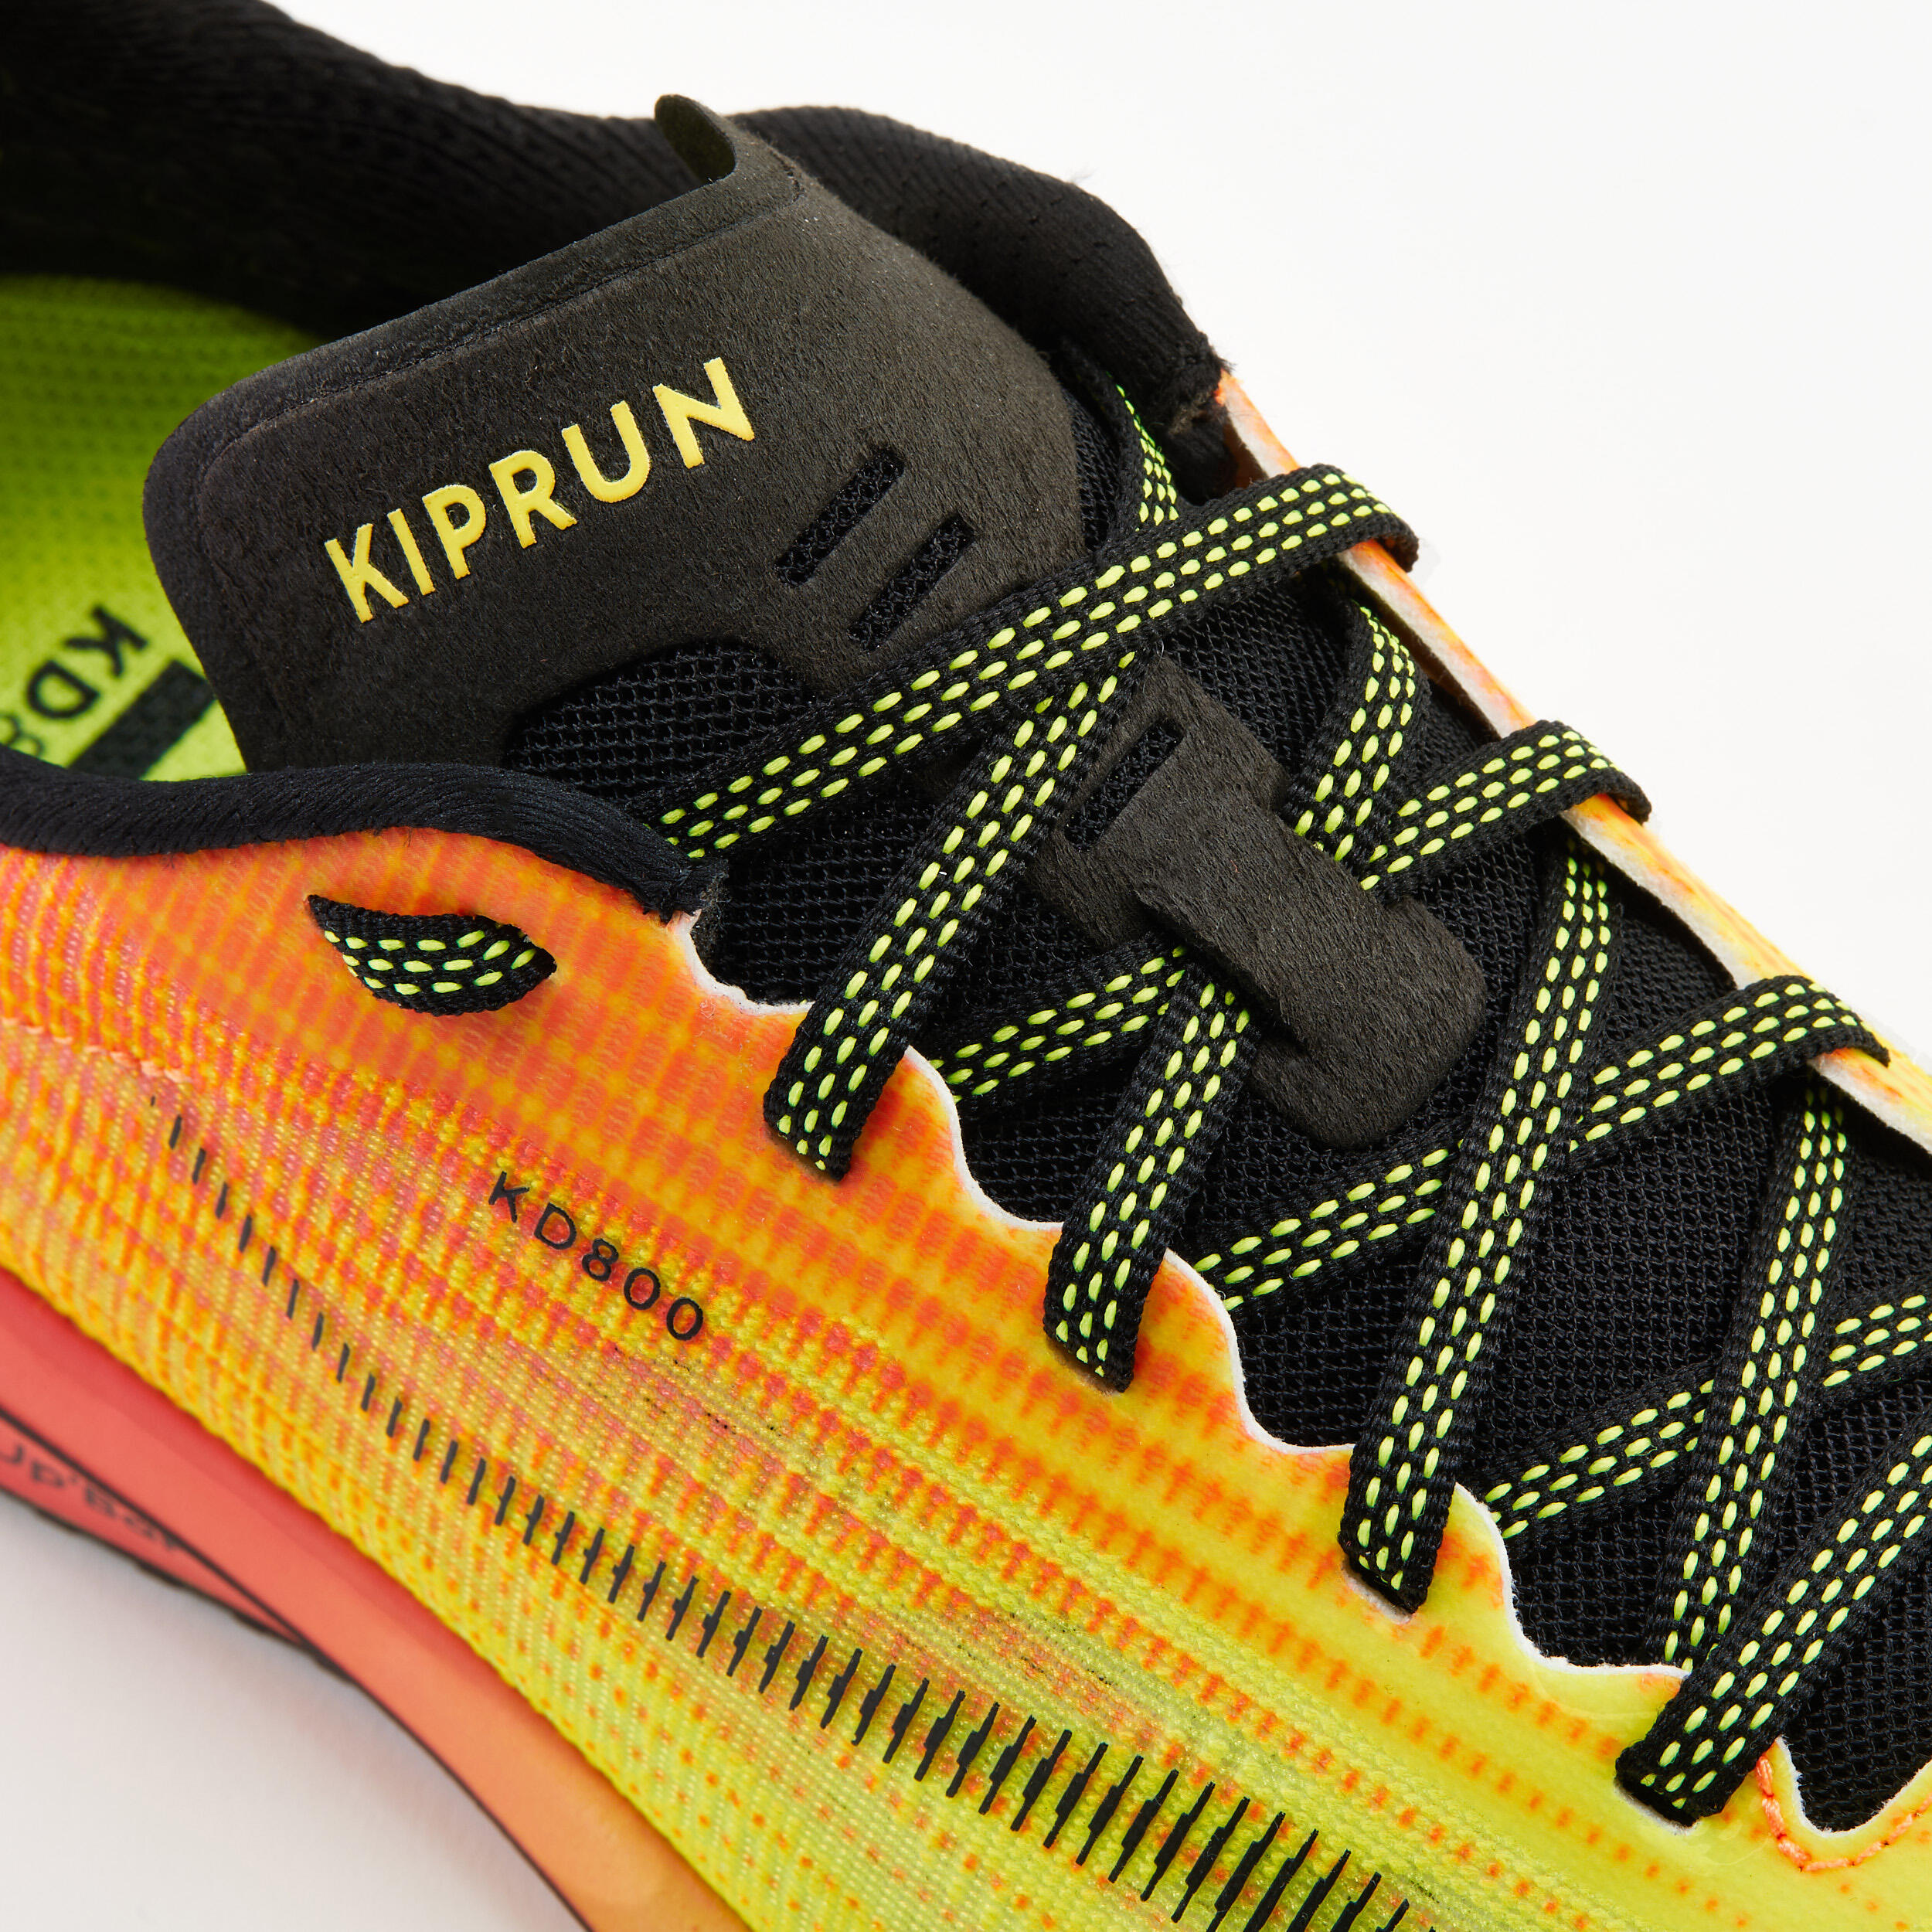 Kiprun KD800 Men's Running Shoes - yellow pink 6/8